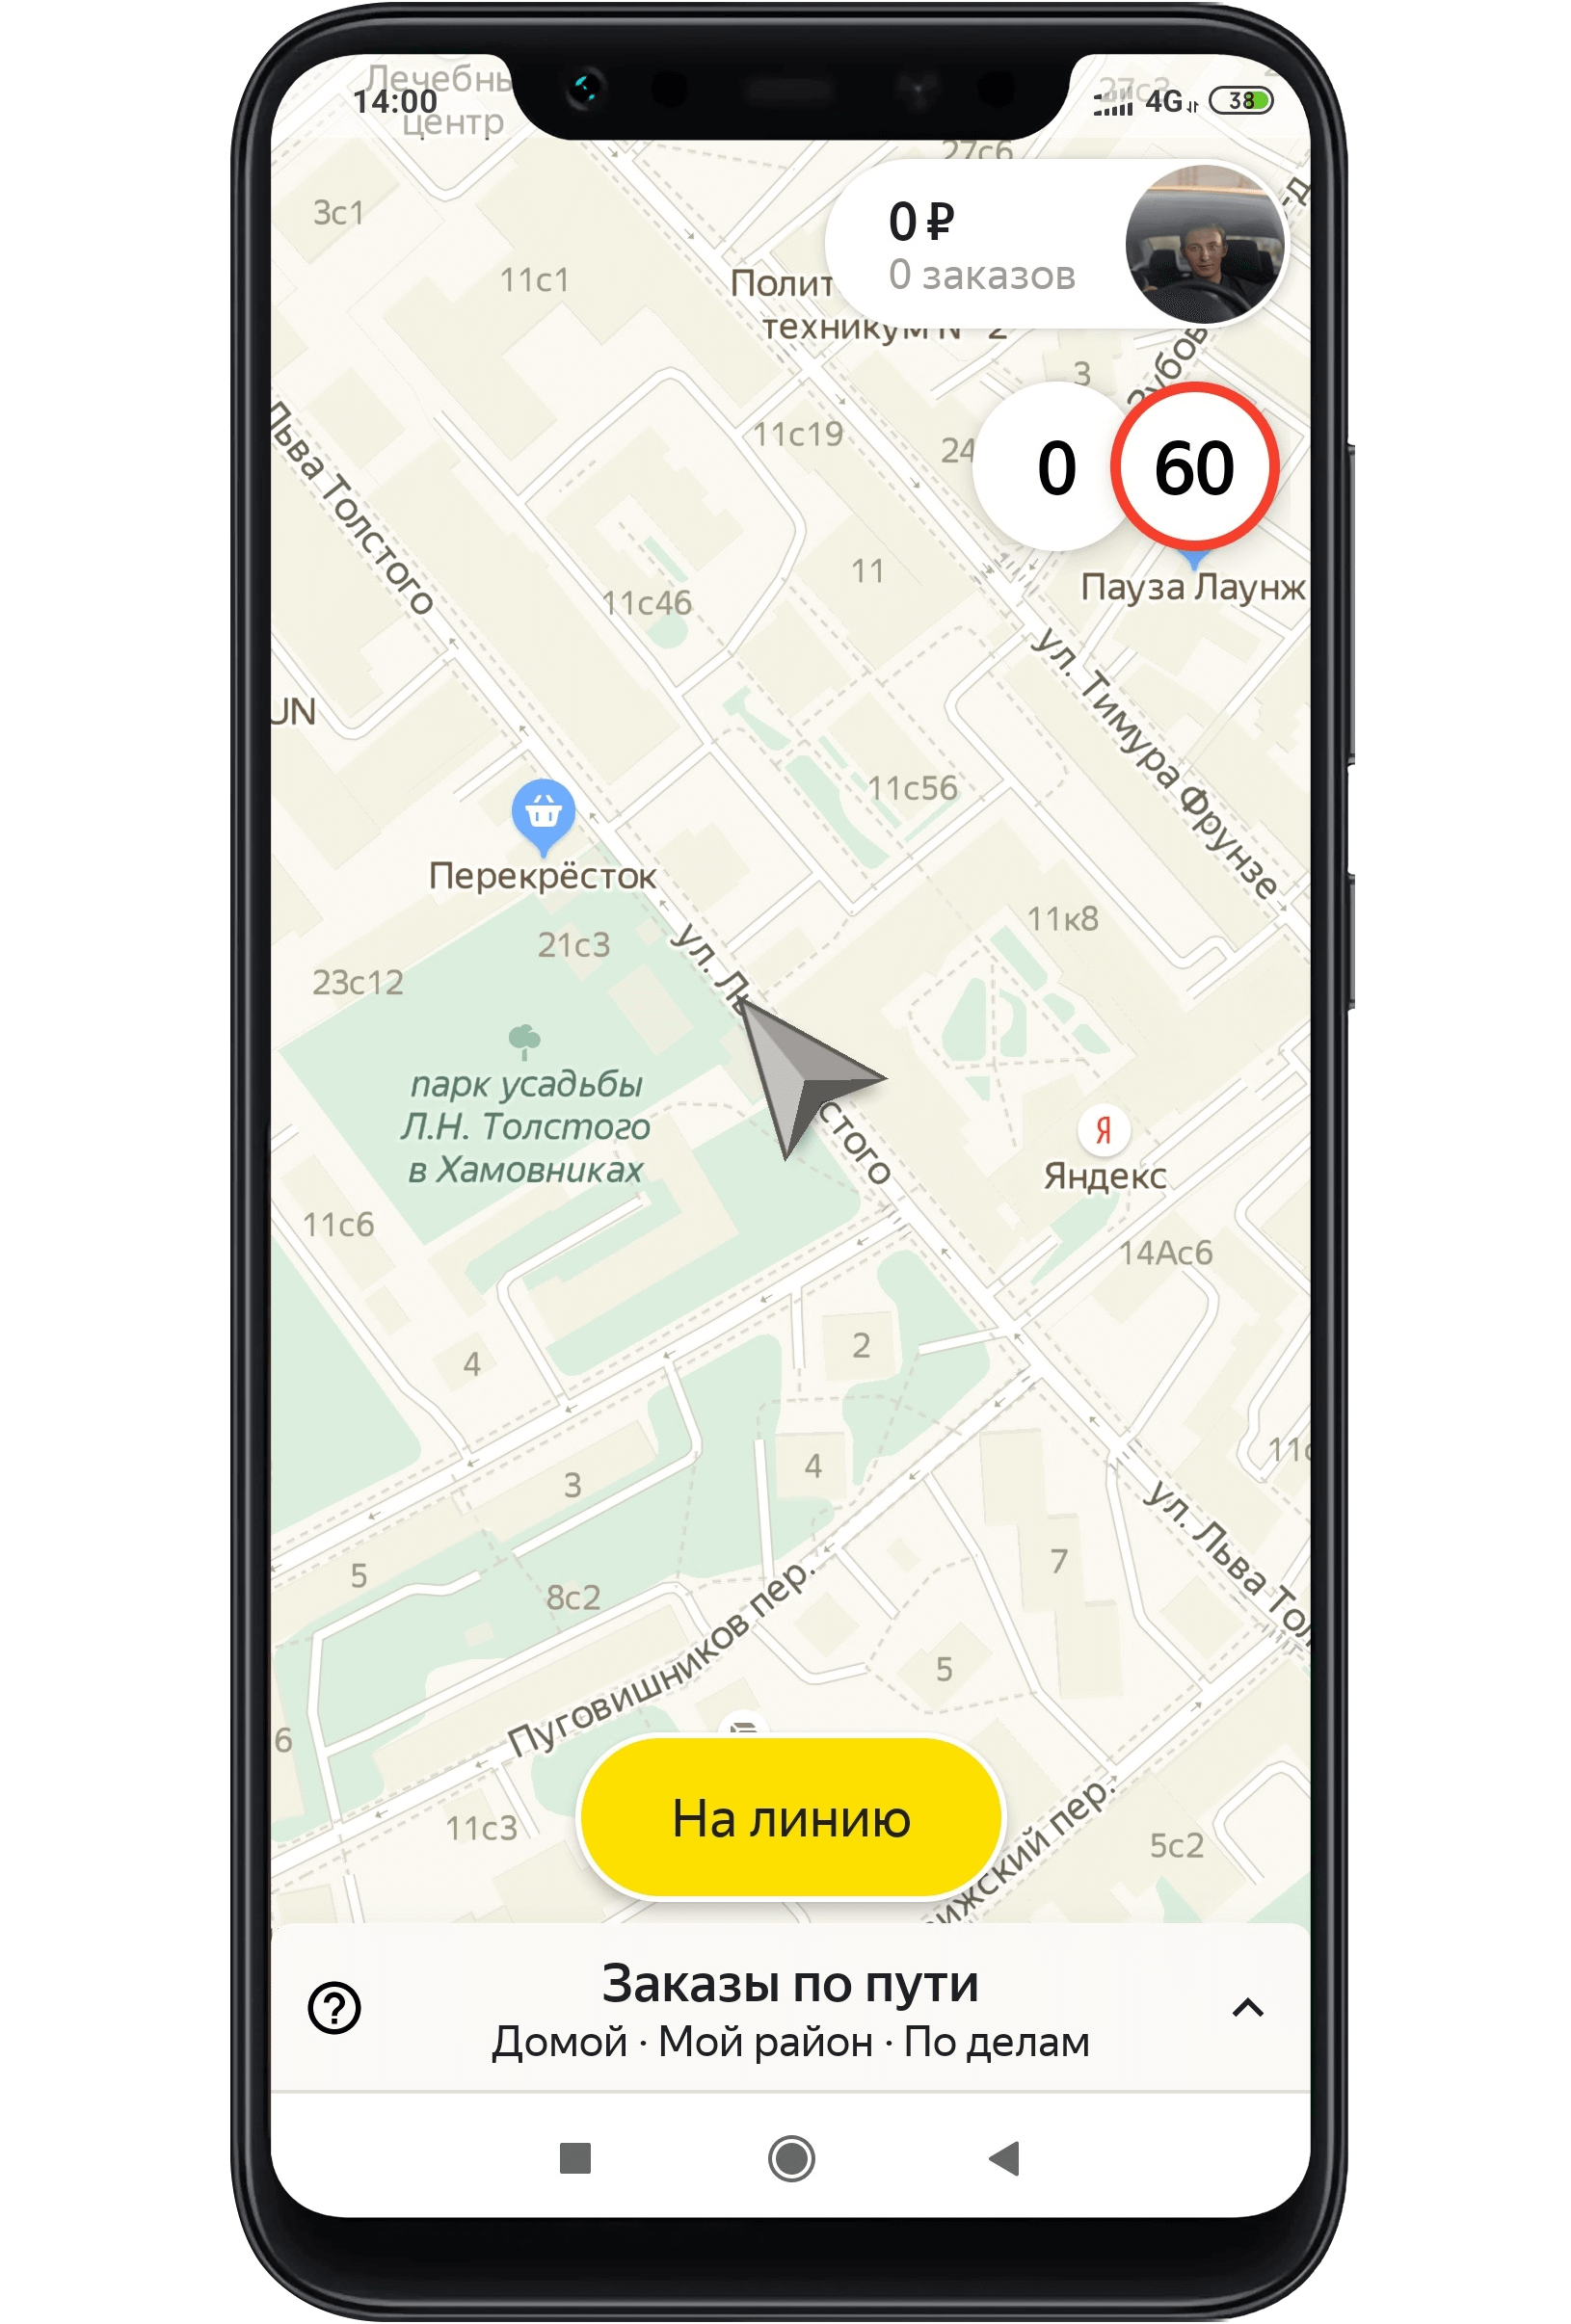 Таксометр приложение. Правила яндекса для водителей